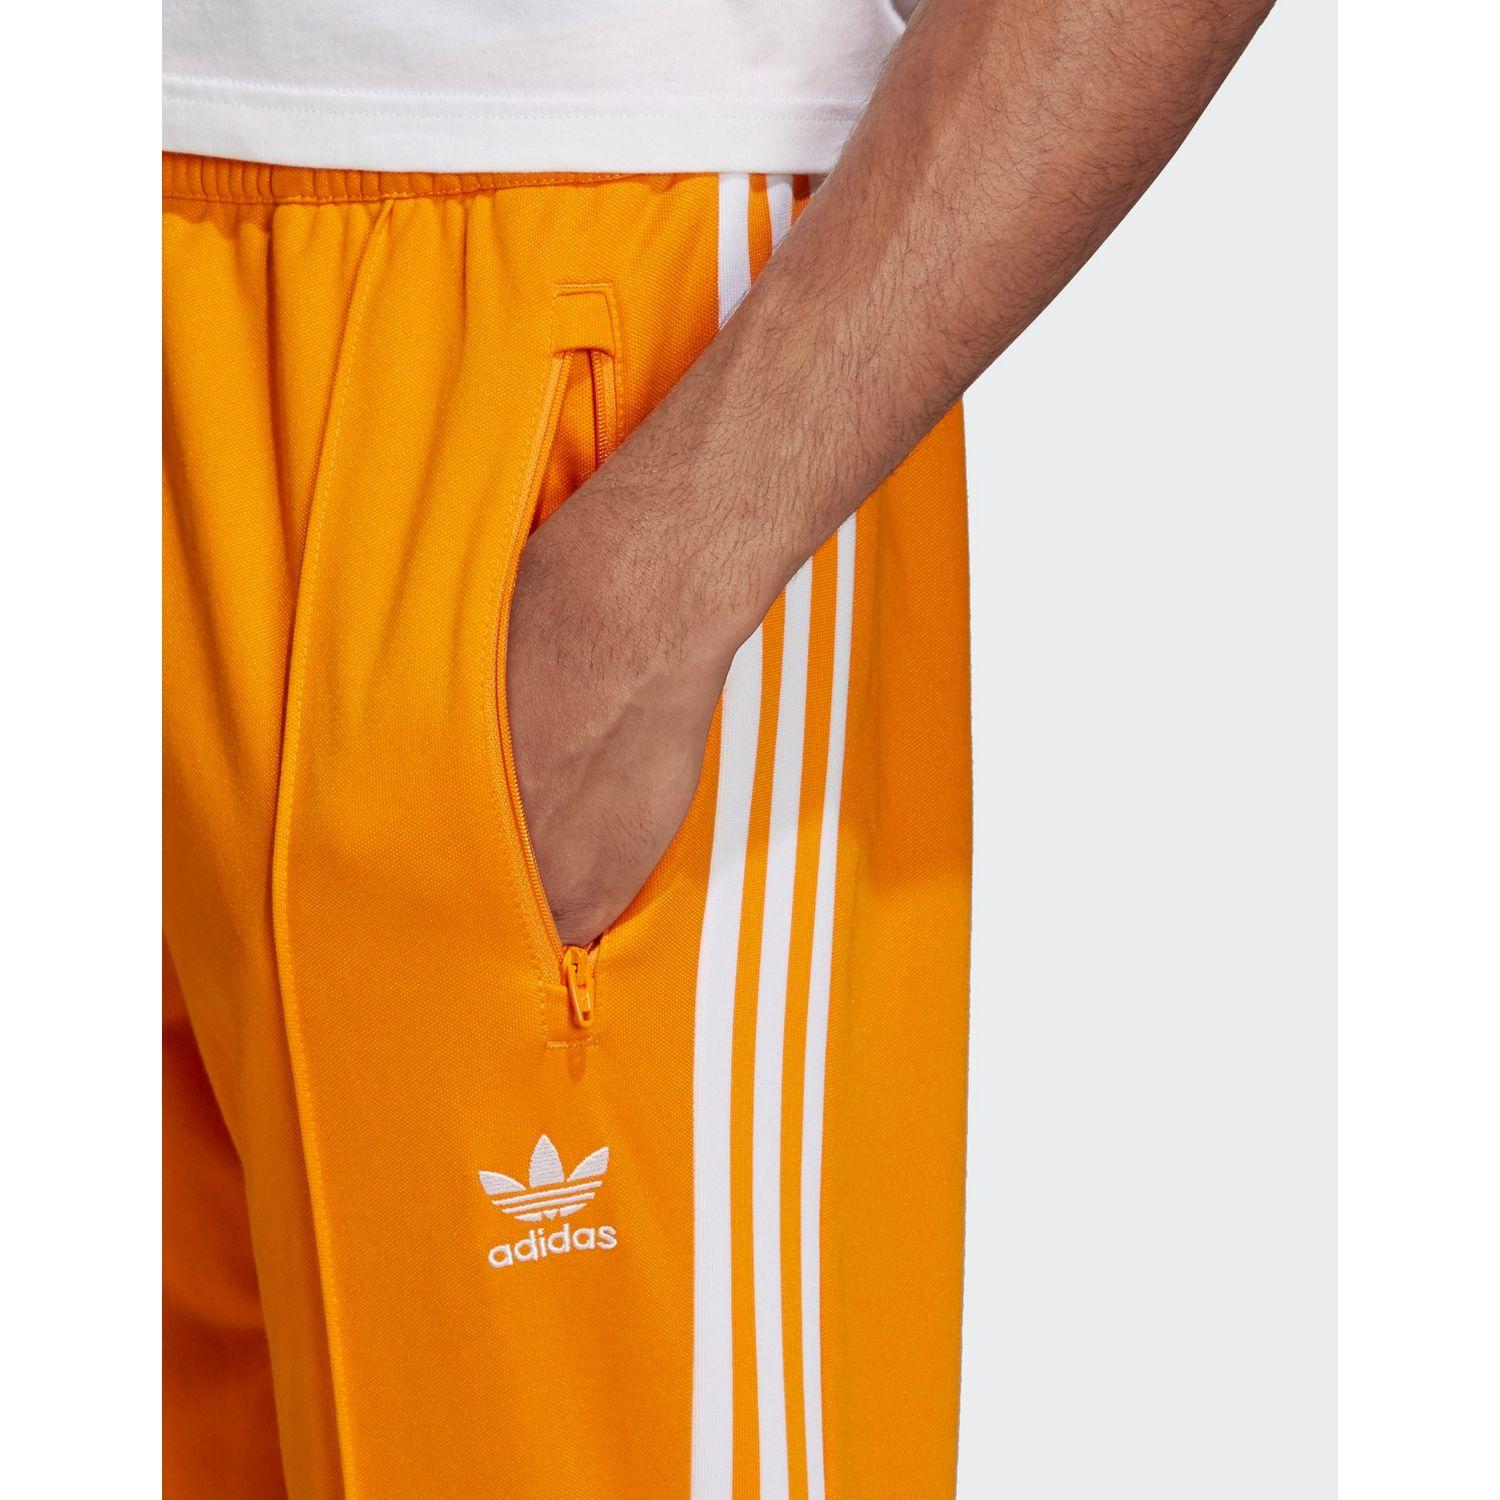 bright orange adidas shorts,welcome to buy,www.wgi.ooo